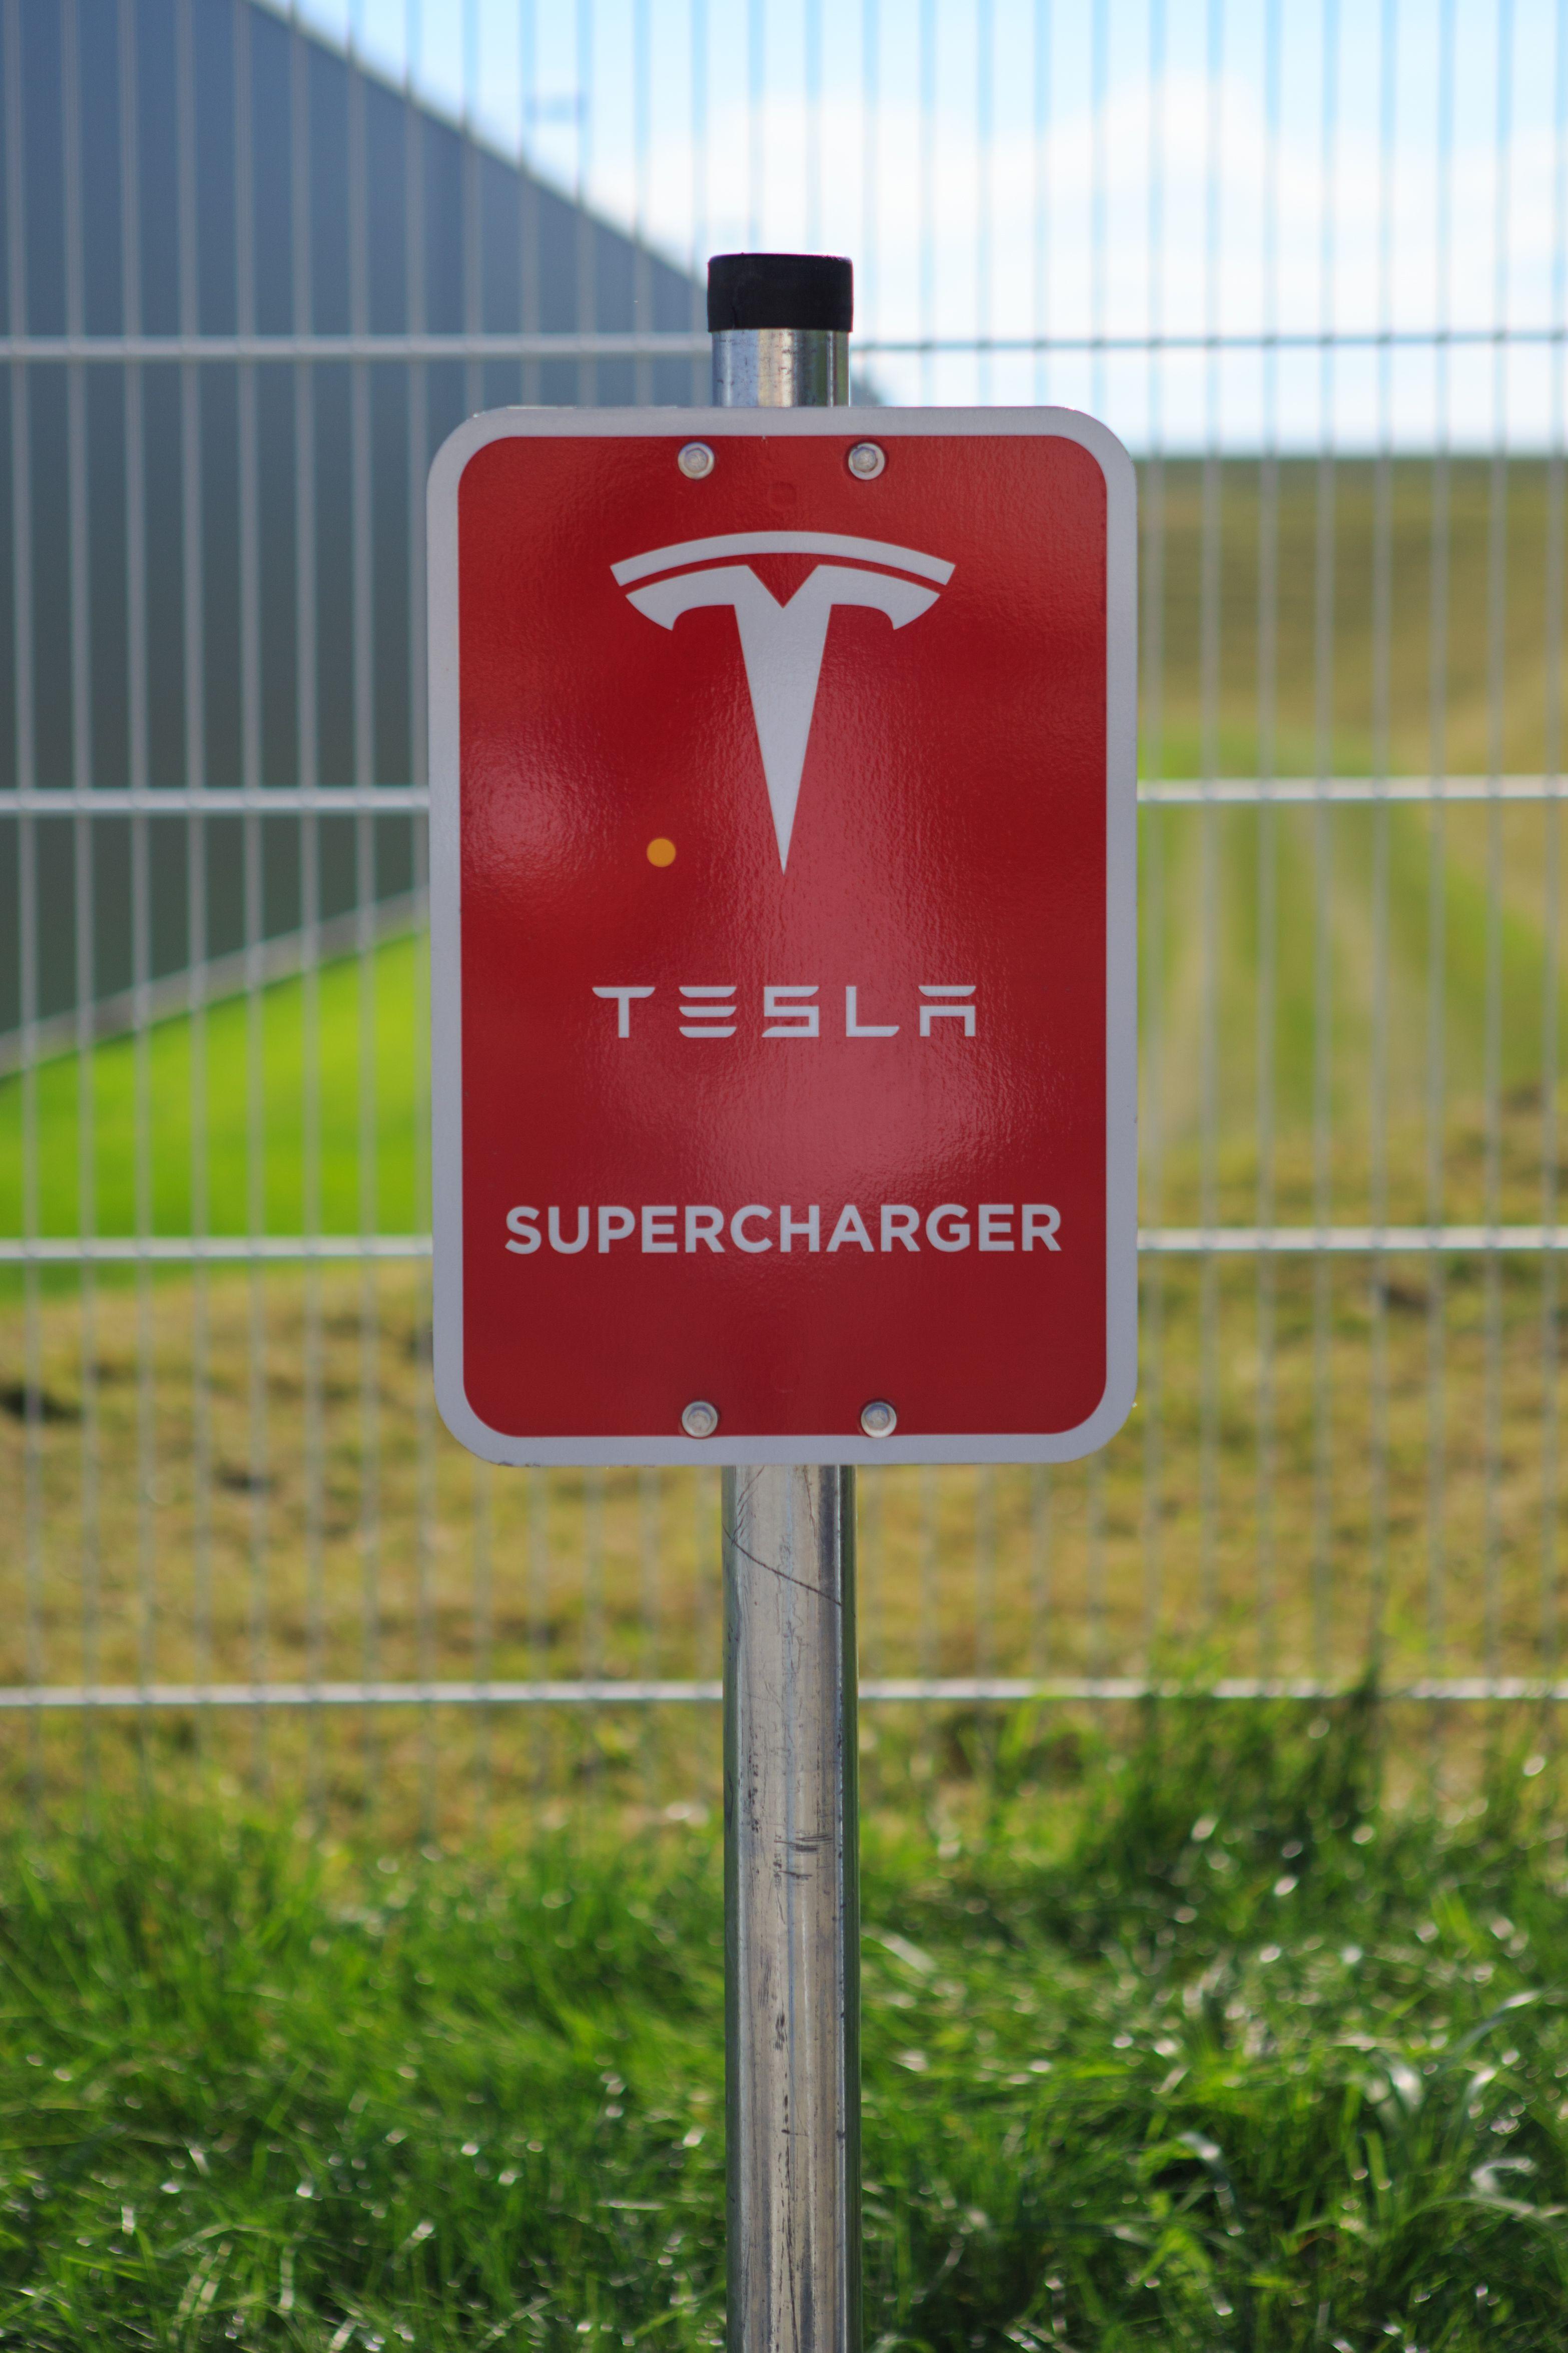 Tesla Supercharger Logo - Tesla logo at Supercharger